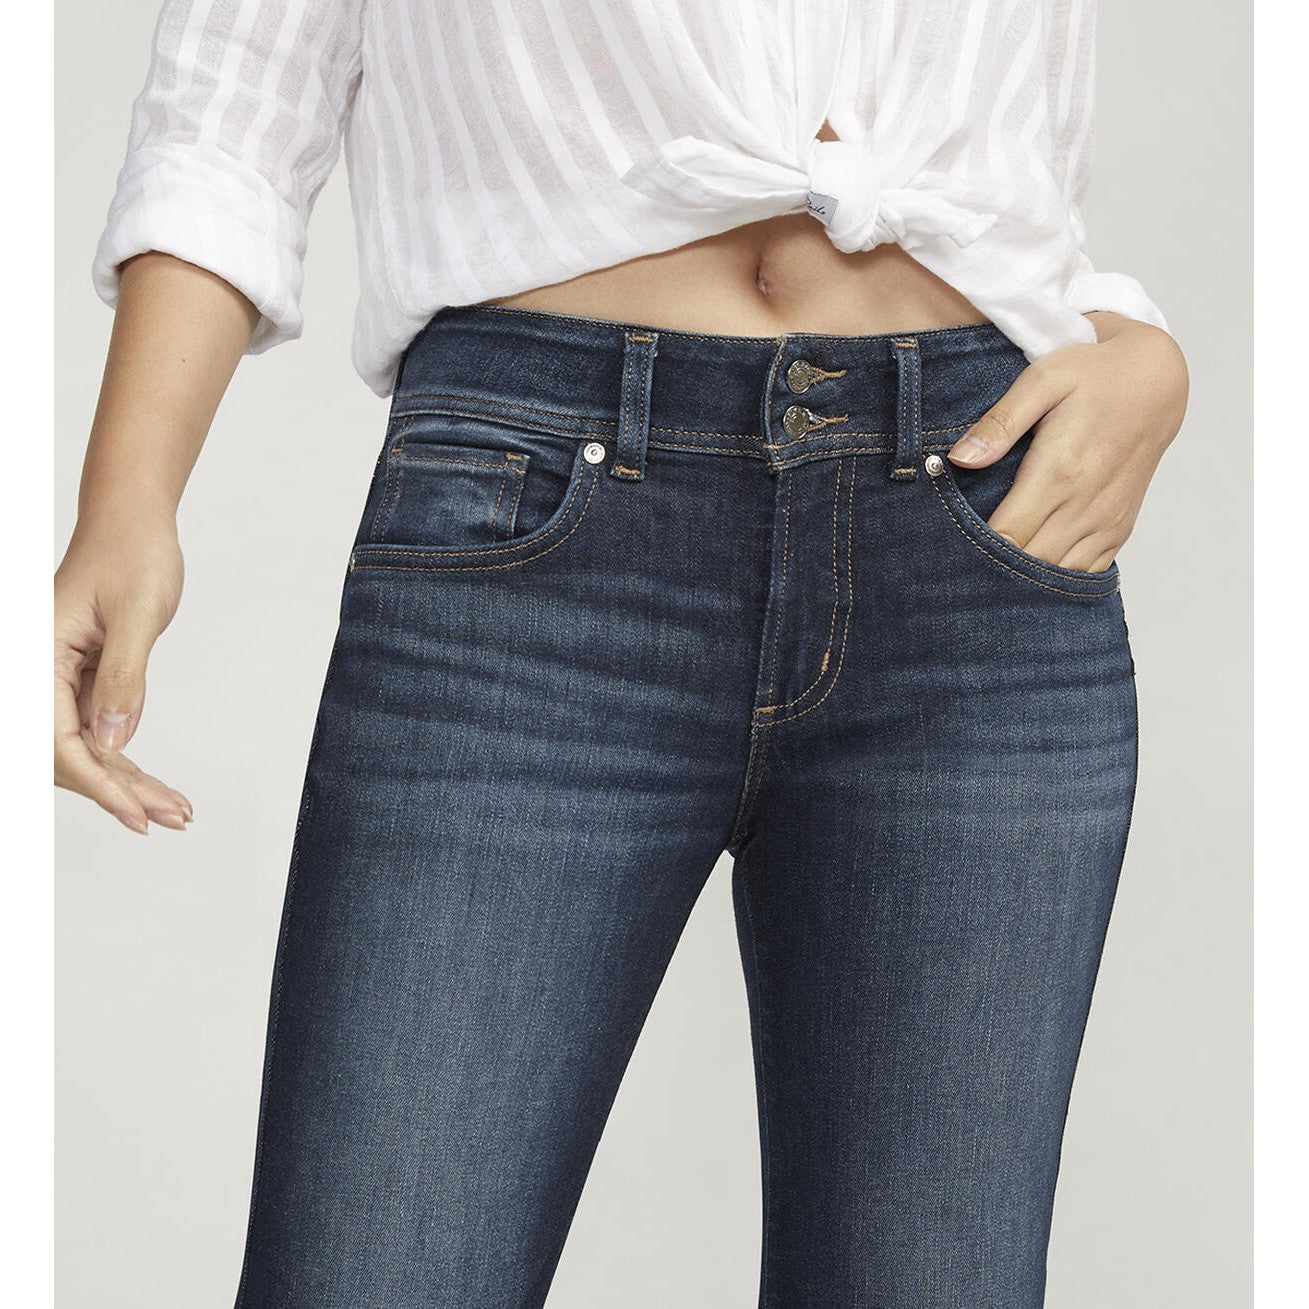 Buy Suki Mid Rise Trouser Leg Jeans Plus Size for CAD 64.00